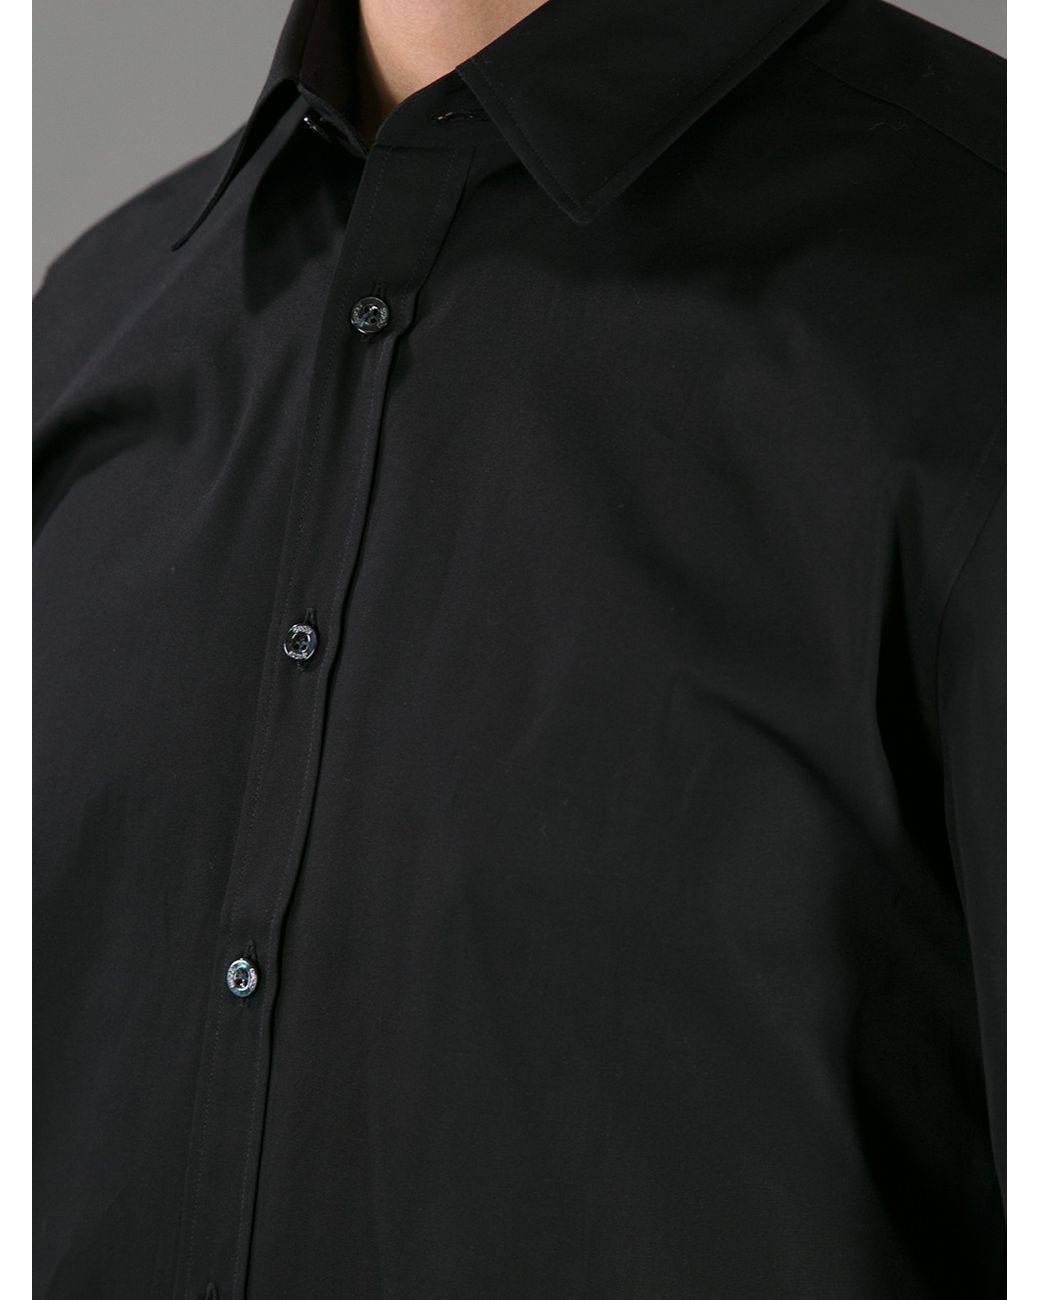 Mens Designer Clothes, GUCCI Men's Button Front Dress Shirt in Black #0355